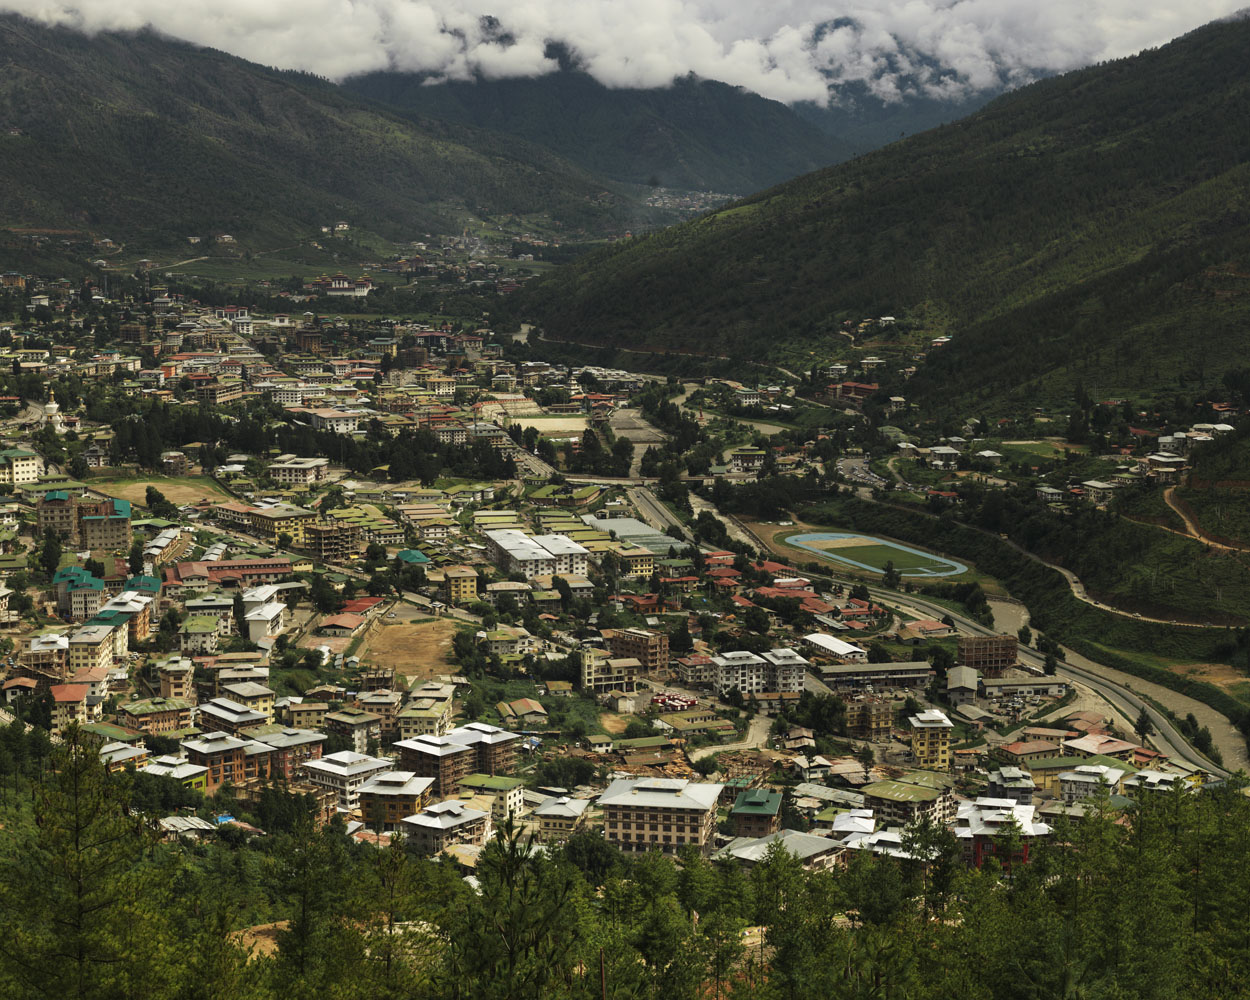 A view of Thimpu, Bhutan's capital.